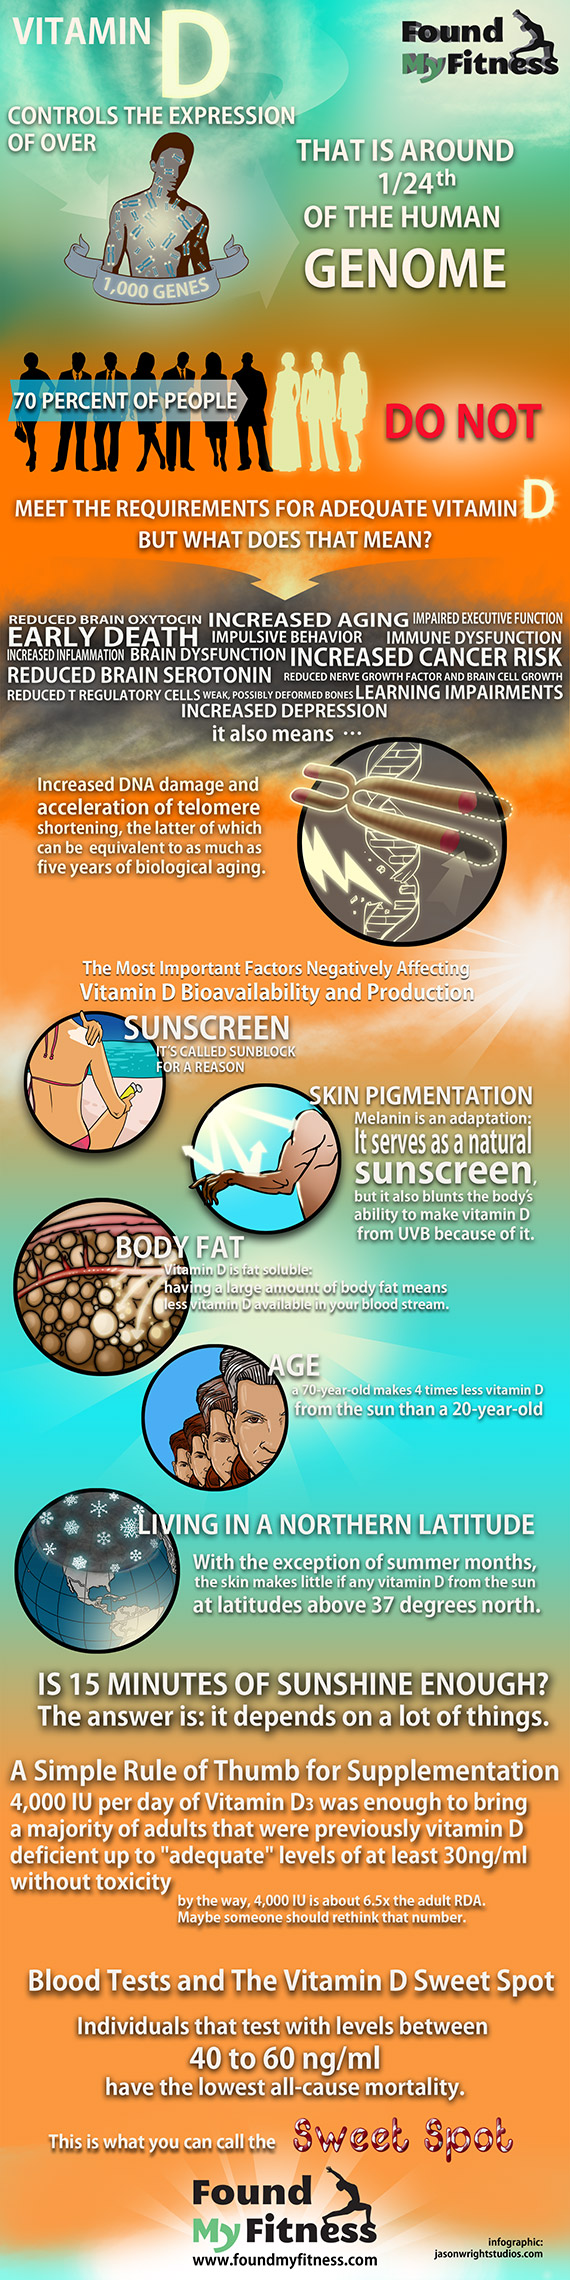 vitamin-d-infographic.jpg